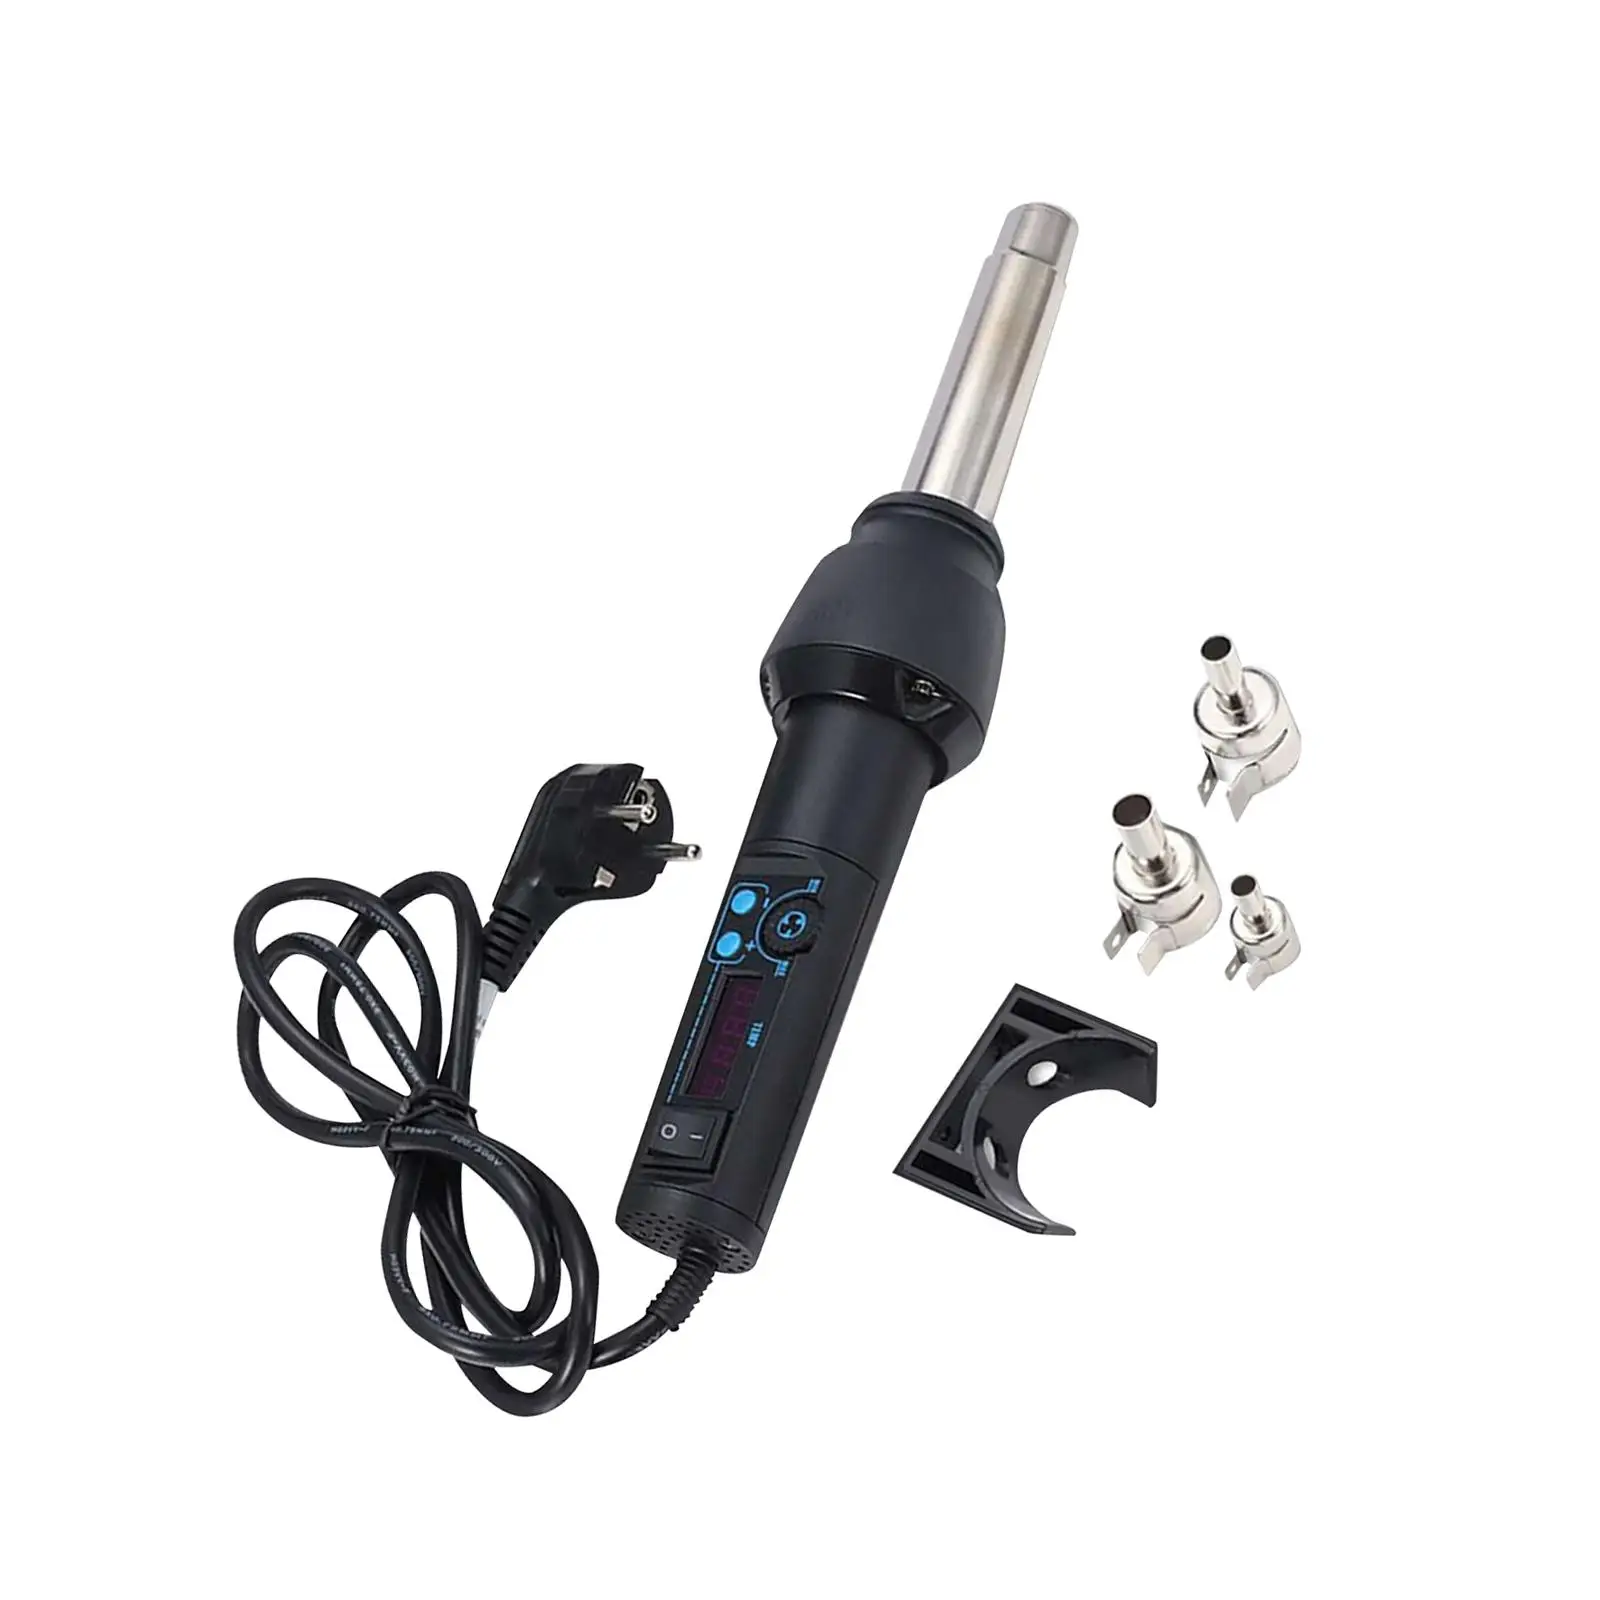 Handheld Mini Hot Air tool with Nozzle 3 Temperature Settings Digital Display Overload Protection Electric Hot Air Pen for DIY